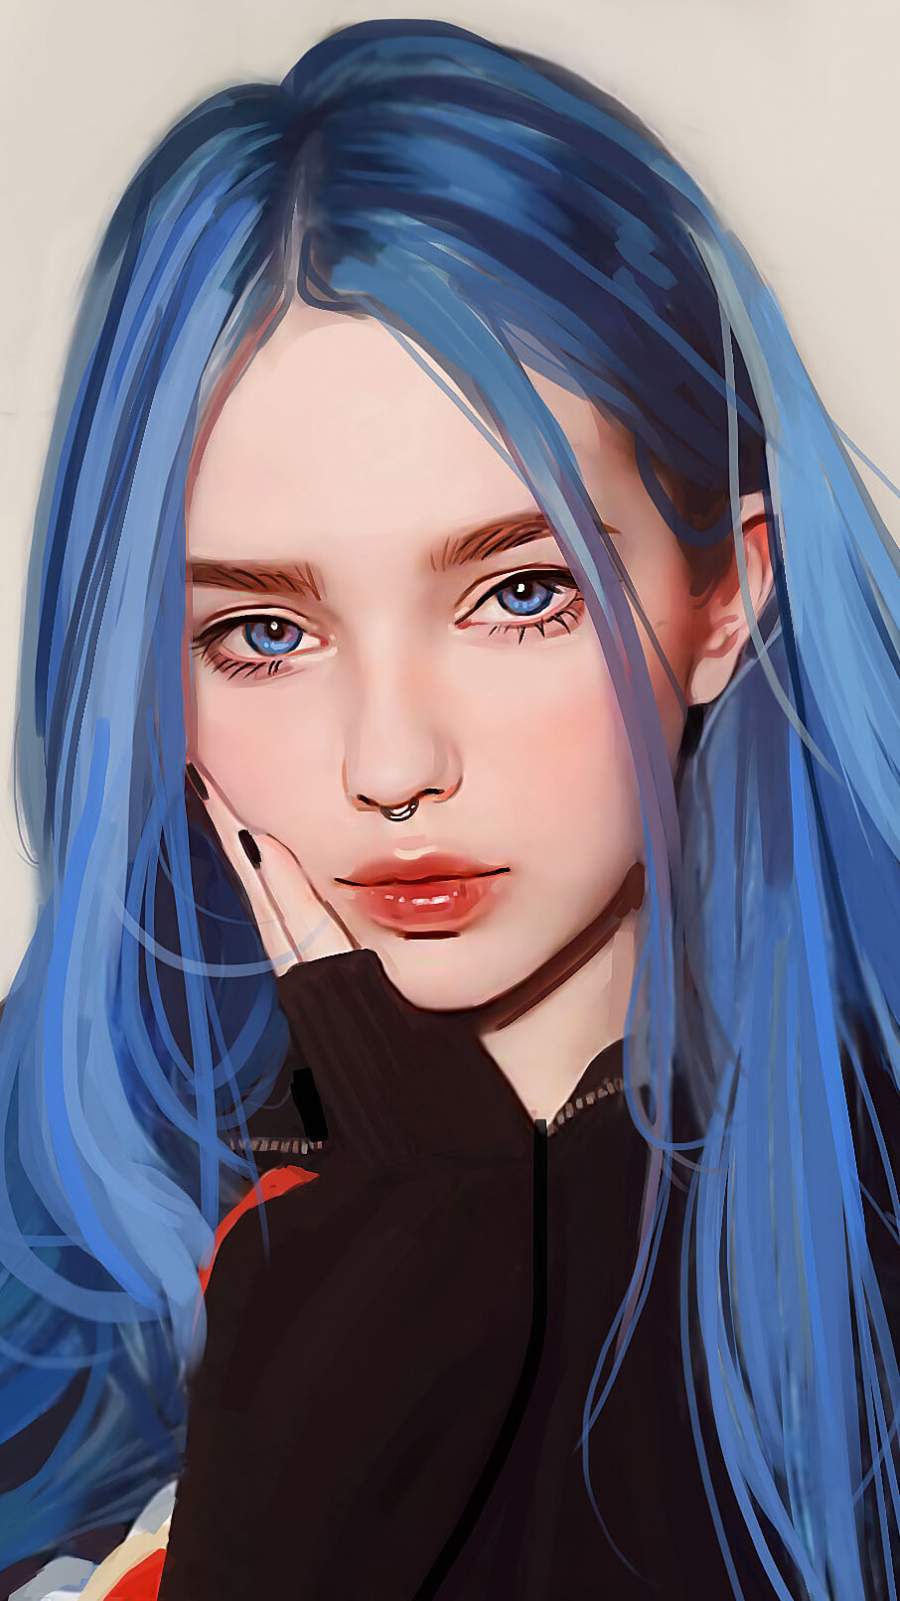 Blue Hairs Girl iPhone Wallpaper